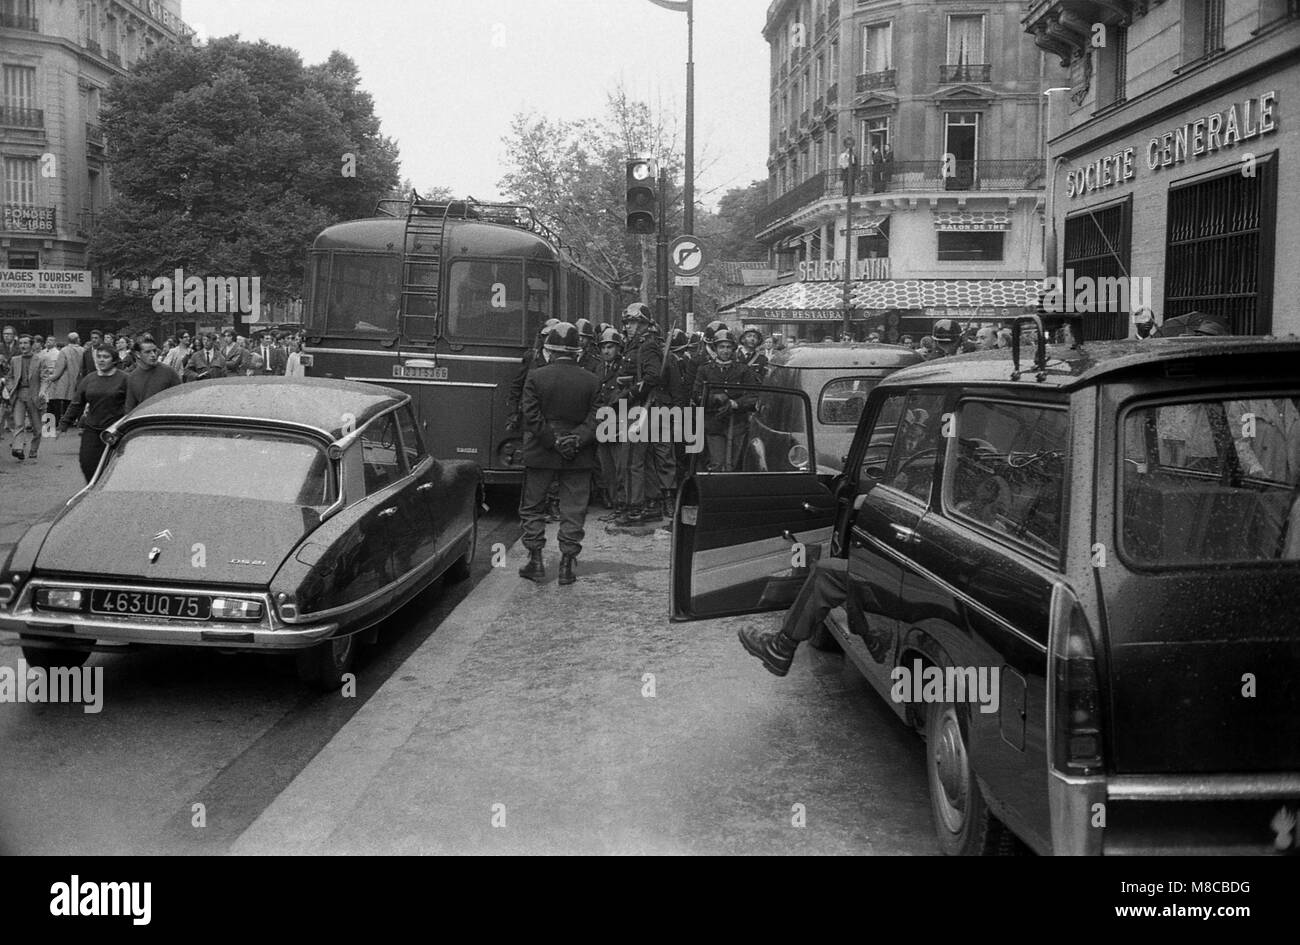 Philippe Gras / Le Pictorium -  May 1968 -  1968  -  France / Ile-de-France (region) / Paris  -  Police forces take a stand Stock Photo